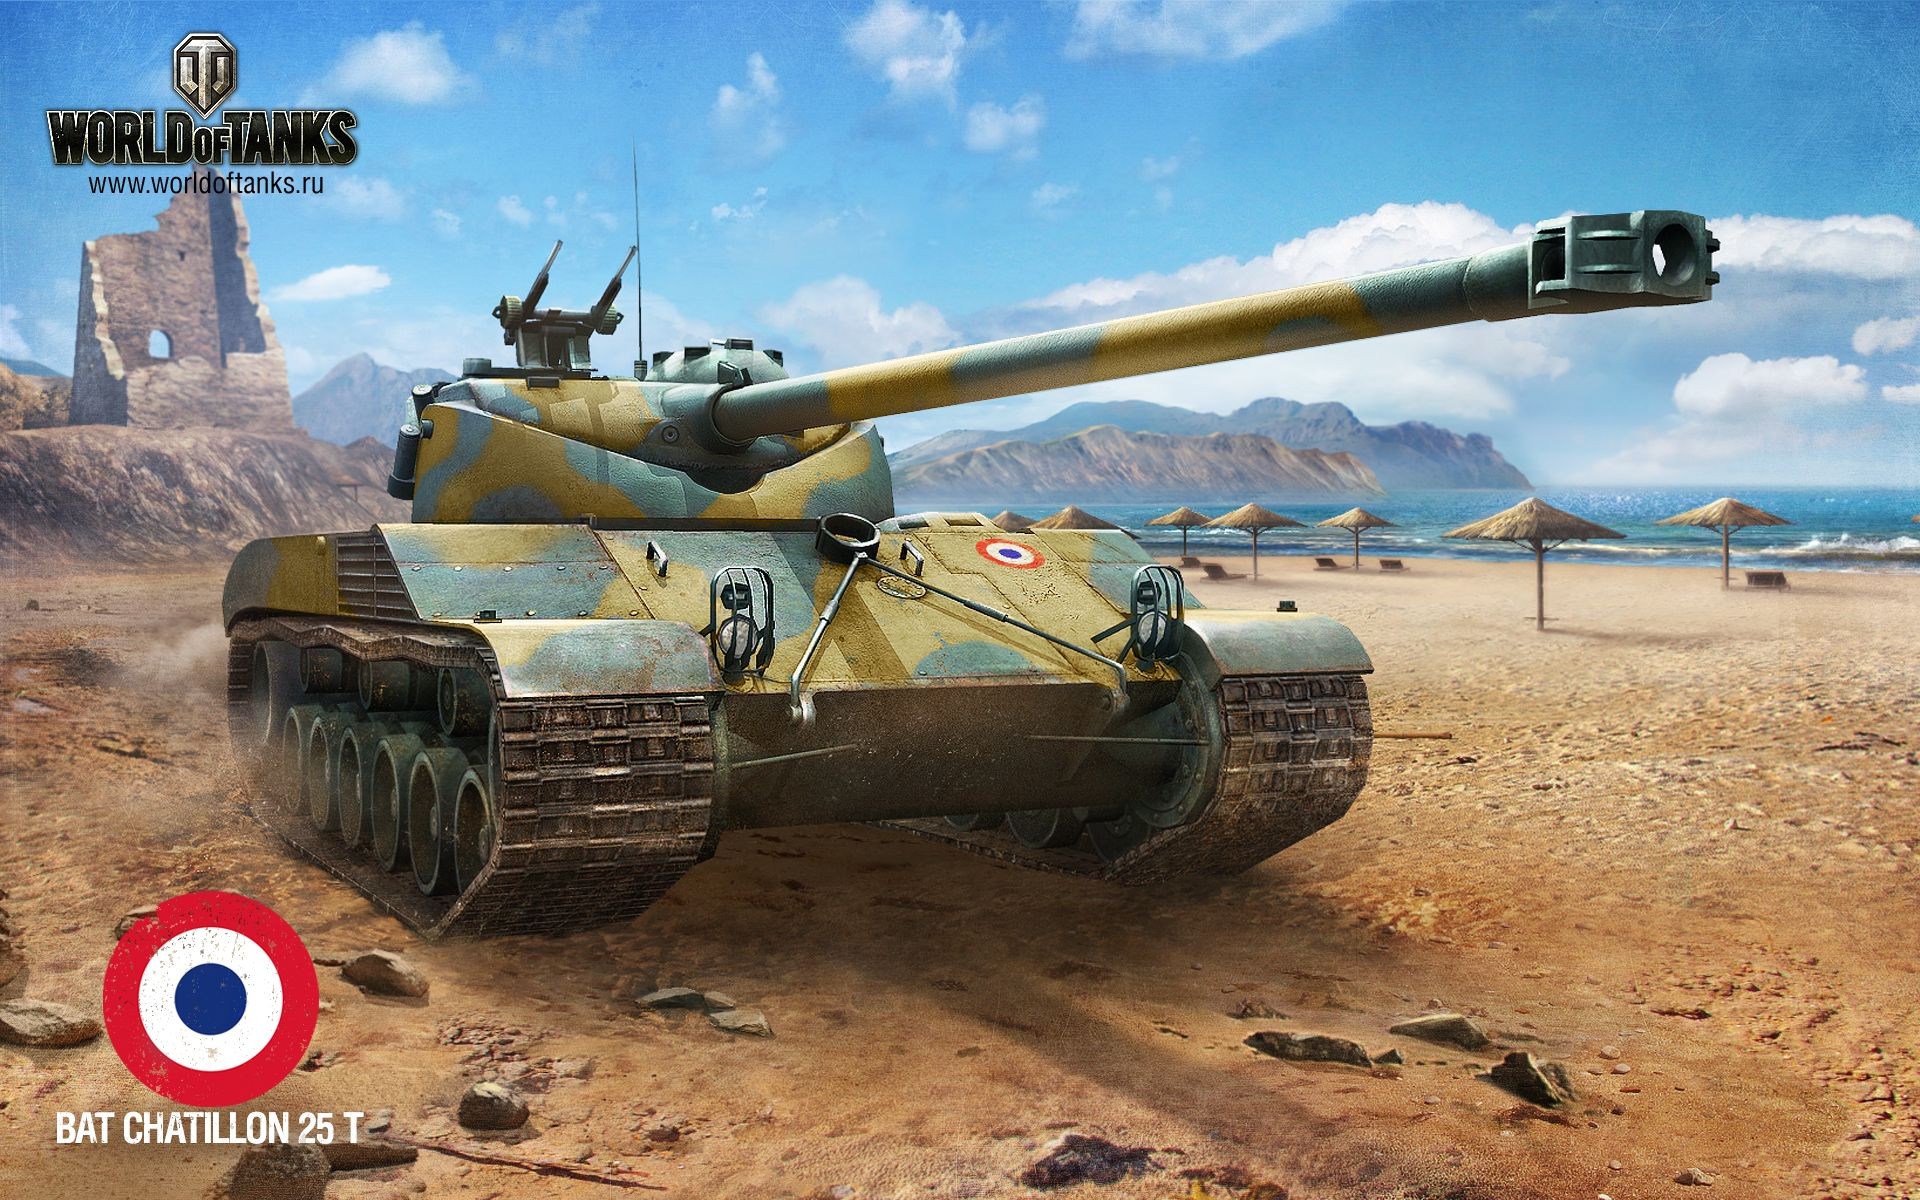 General 1920x1200 World of Tanks tank wargaming video games PC gaming video game art military vehicle vehicle military